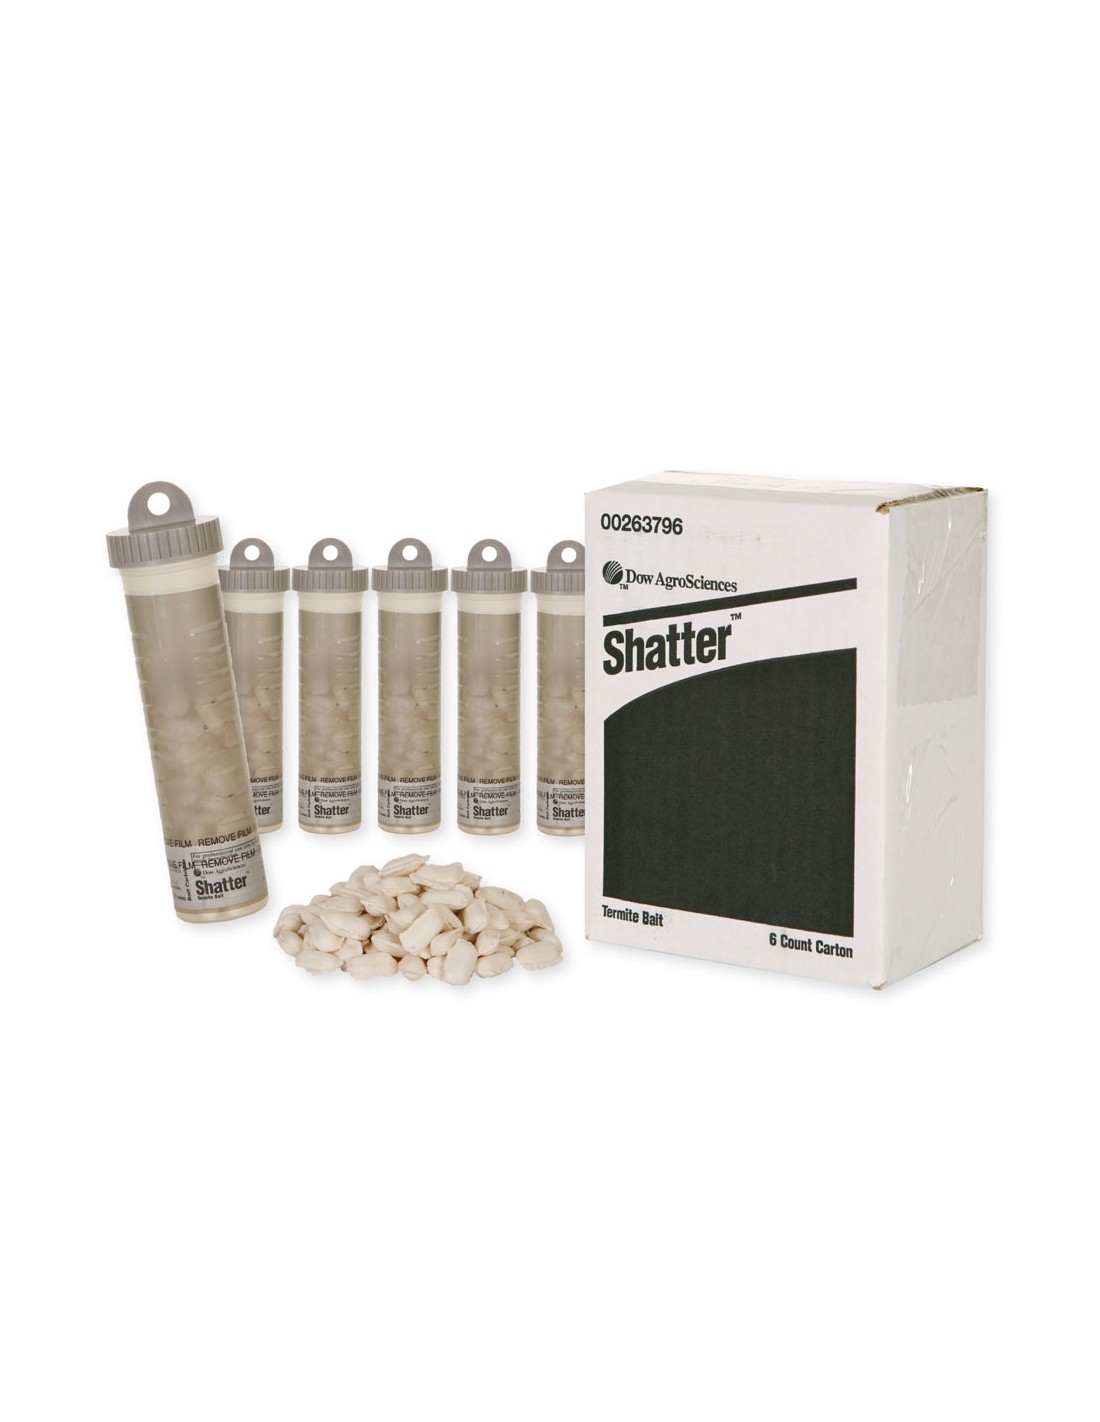 Shatter Termite Bait Cartridge